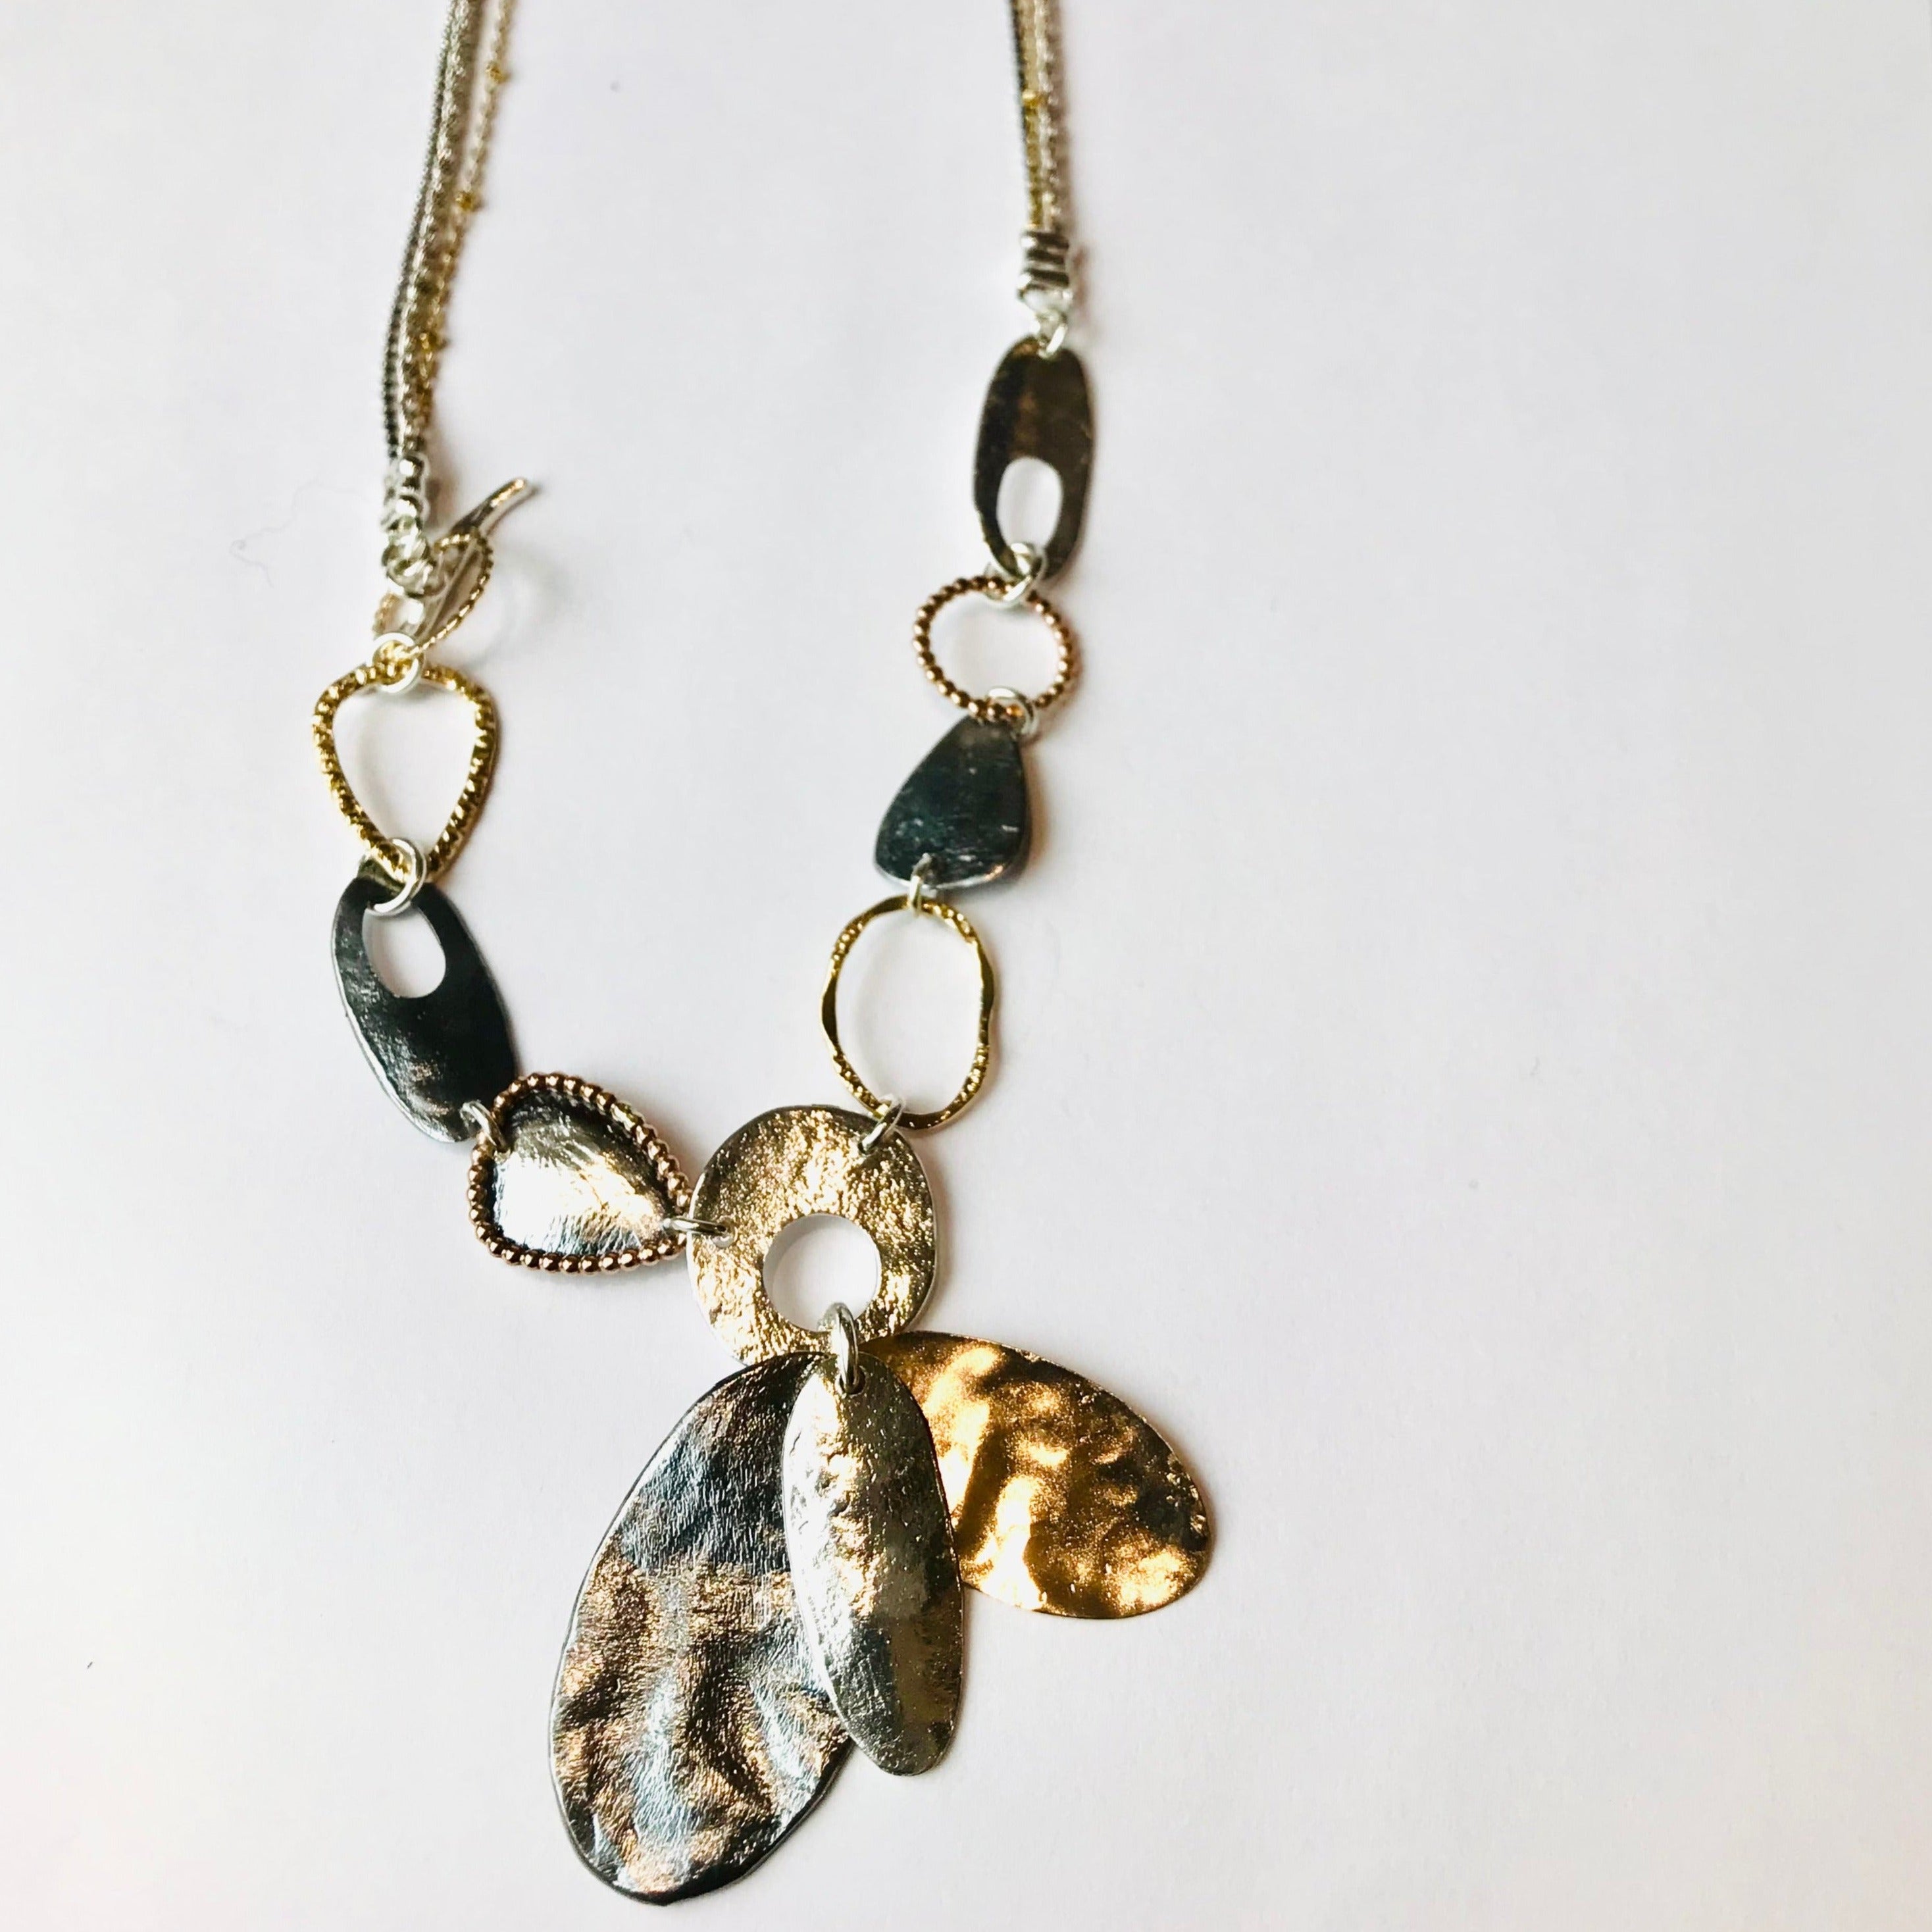 necklace - The Nancy Smillie Shop - Art, Jewellery & Designer Gifts Glasgow